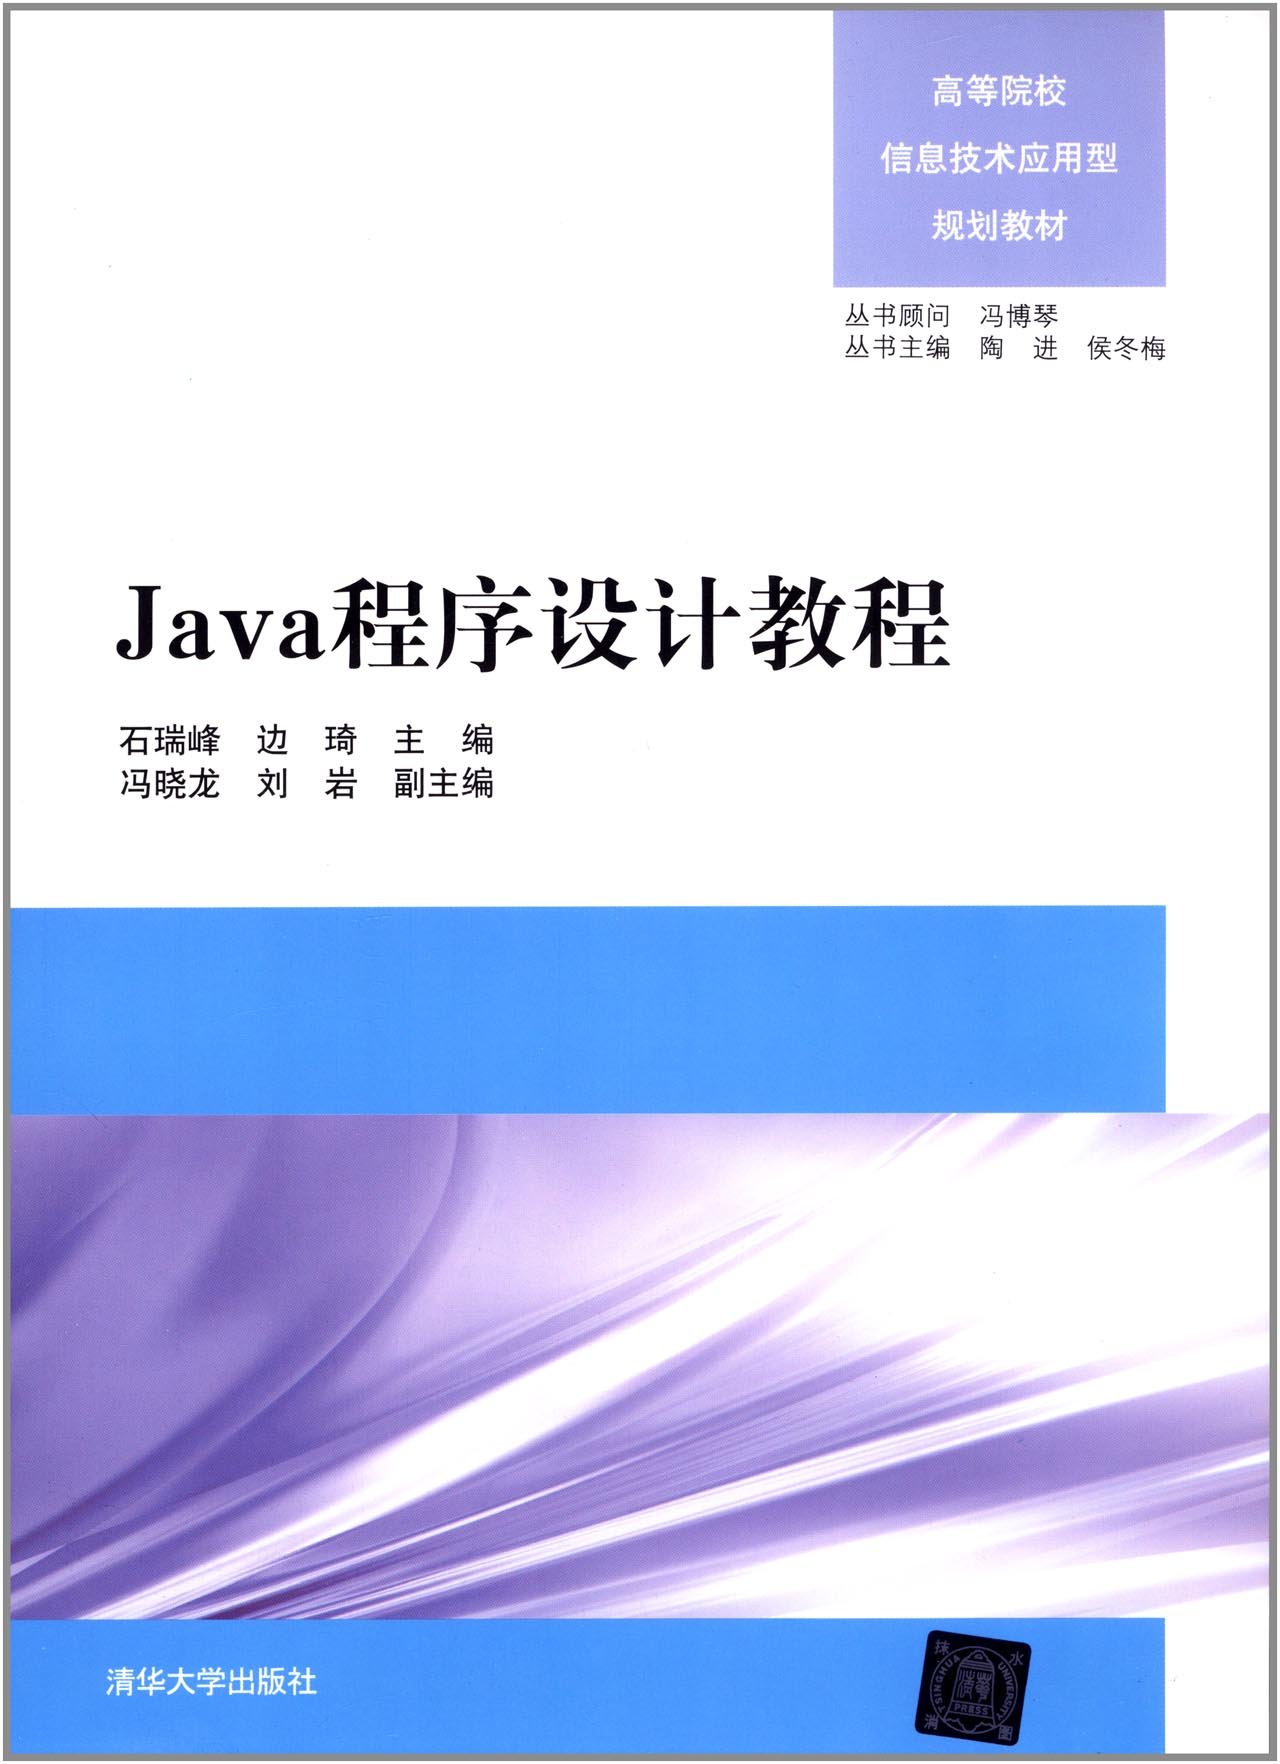 Java程式設計教程(石瑞峰、邊琦、馮小龍、劉岩編著書籍)